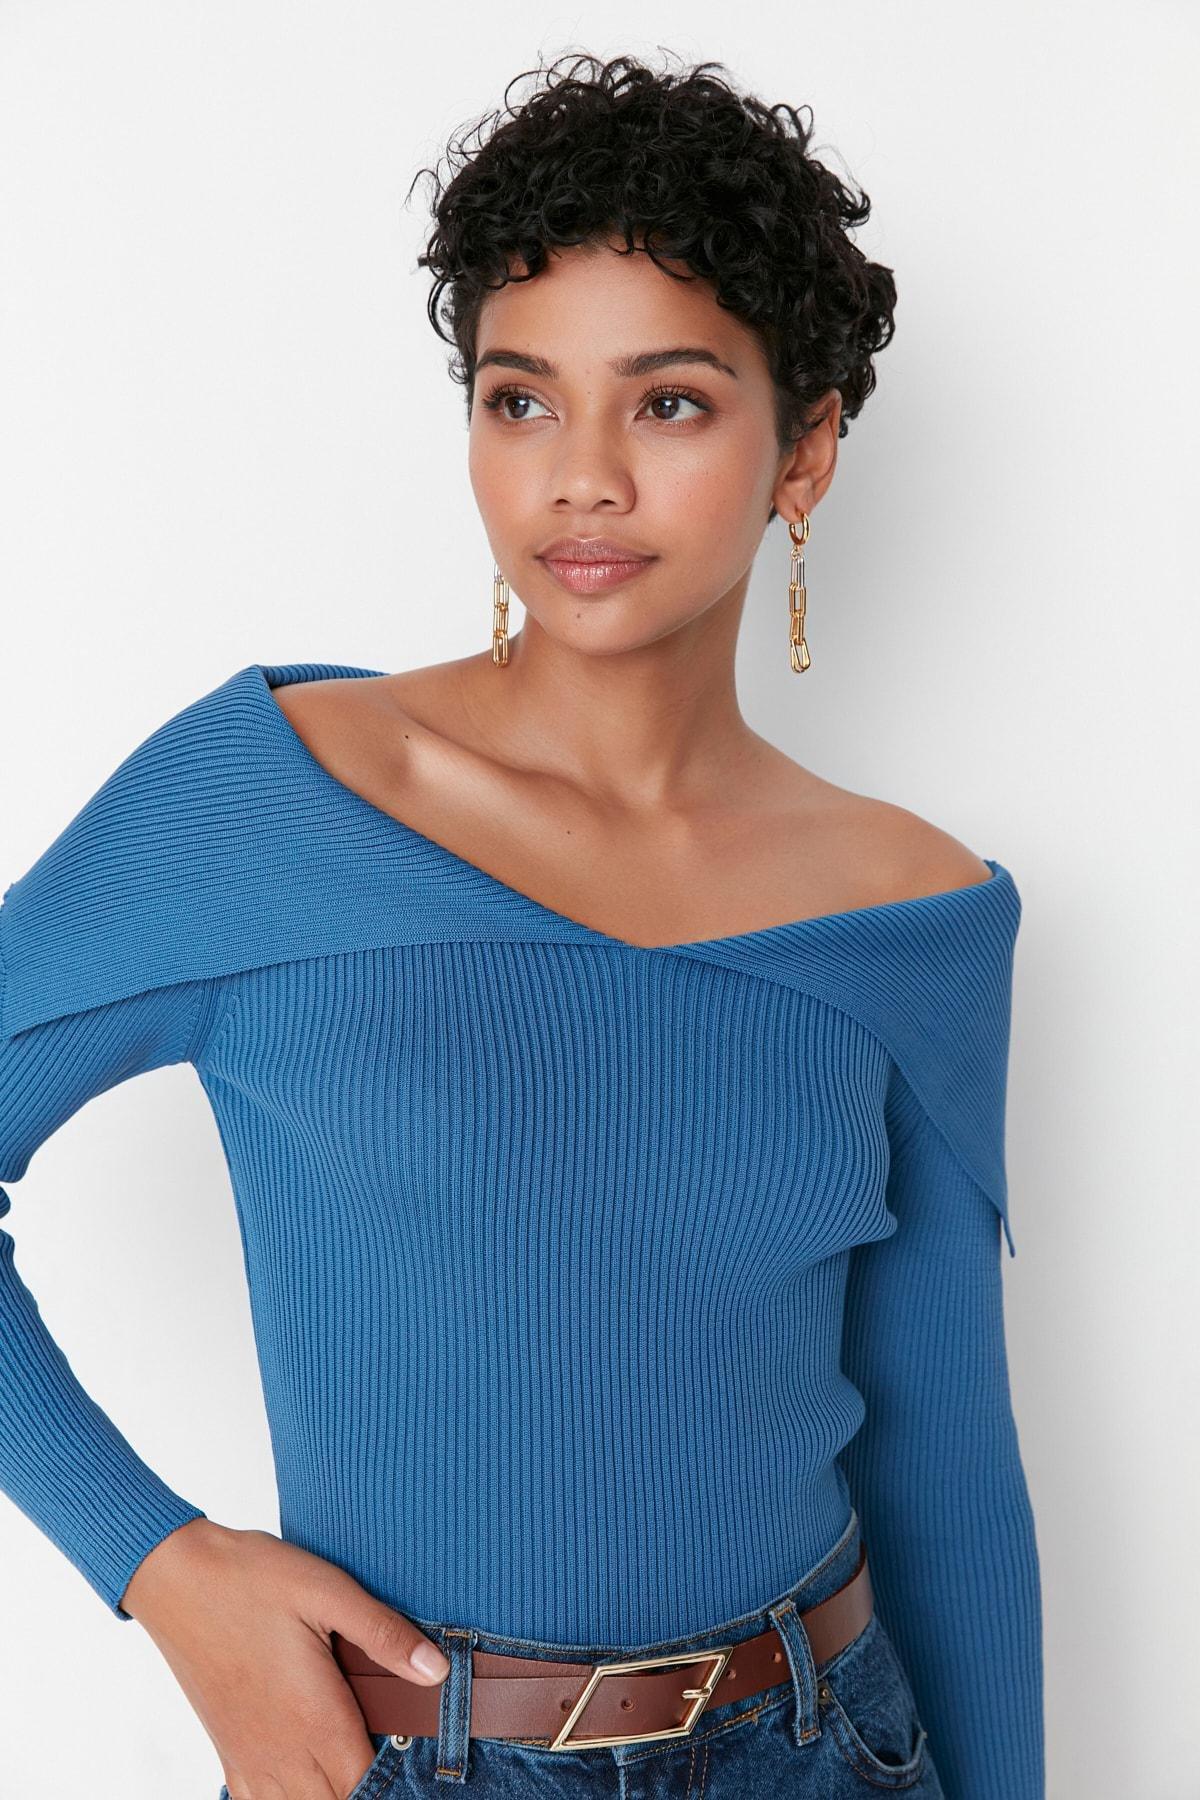 Trendyol - Navy Turndown Collar Sweater